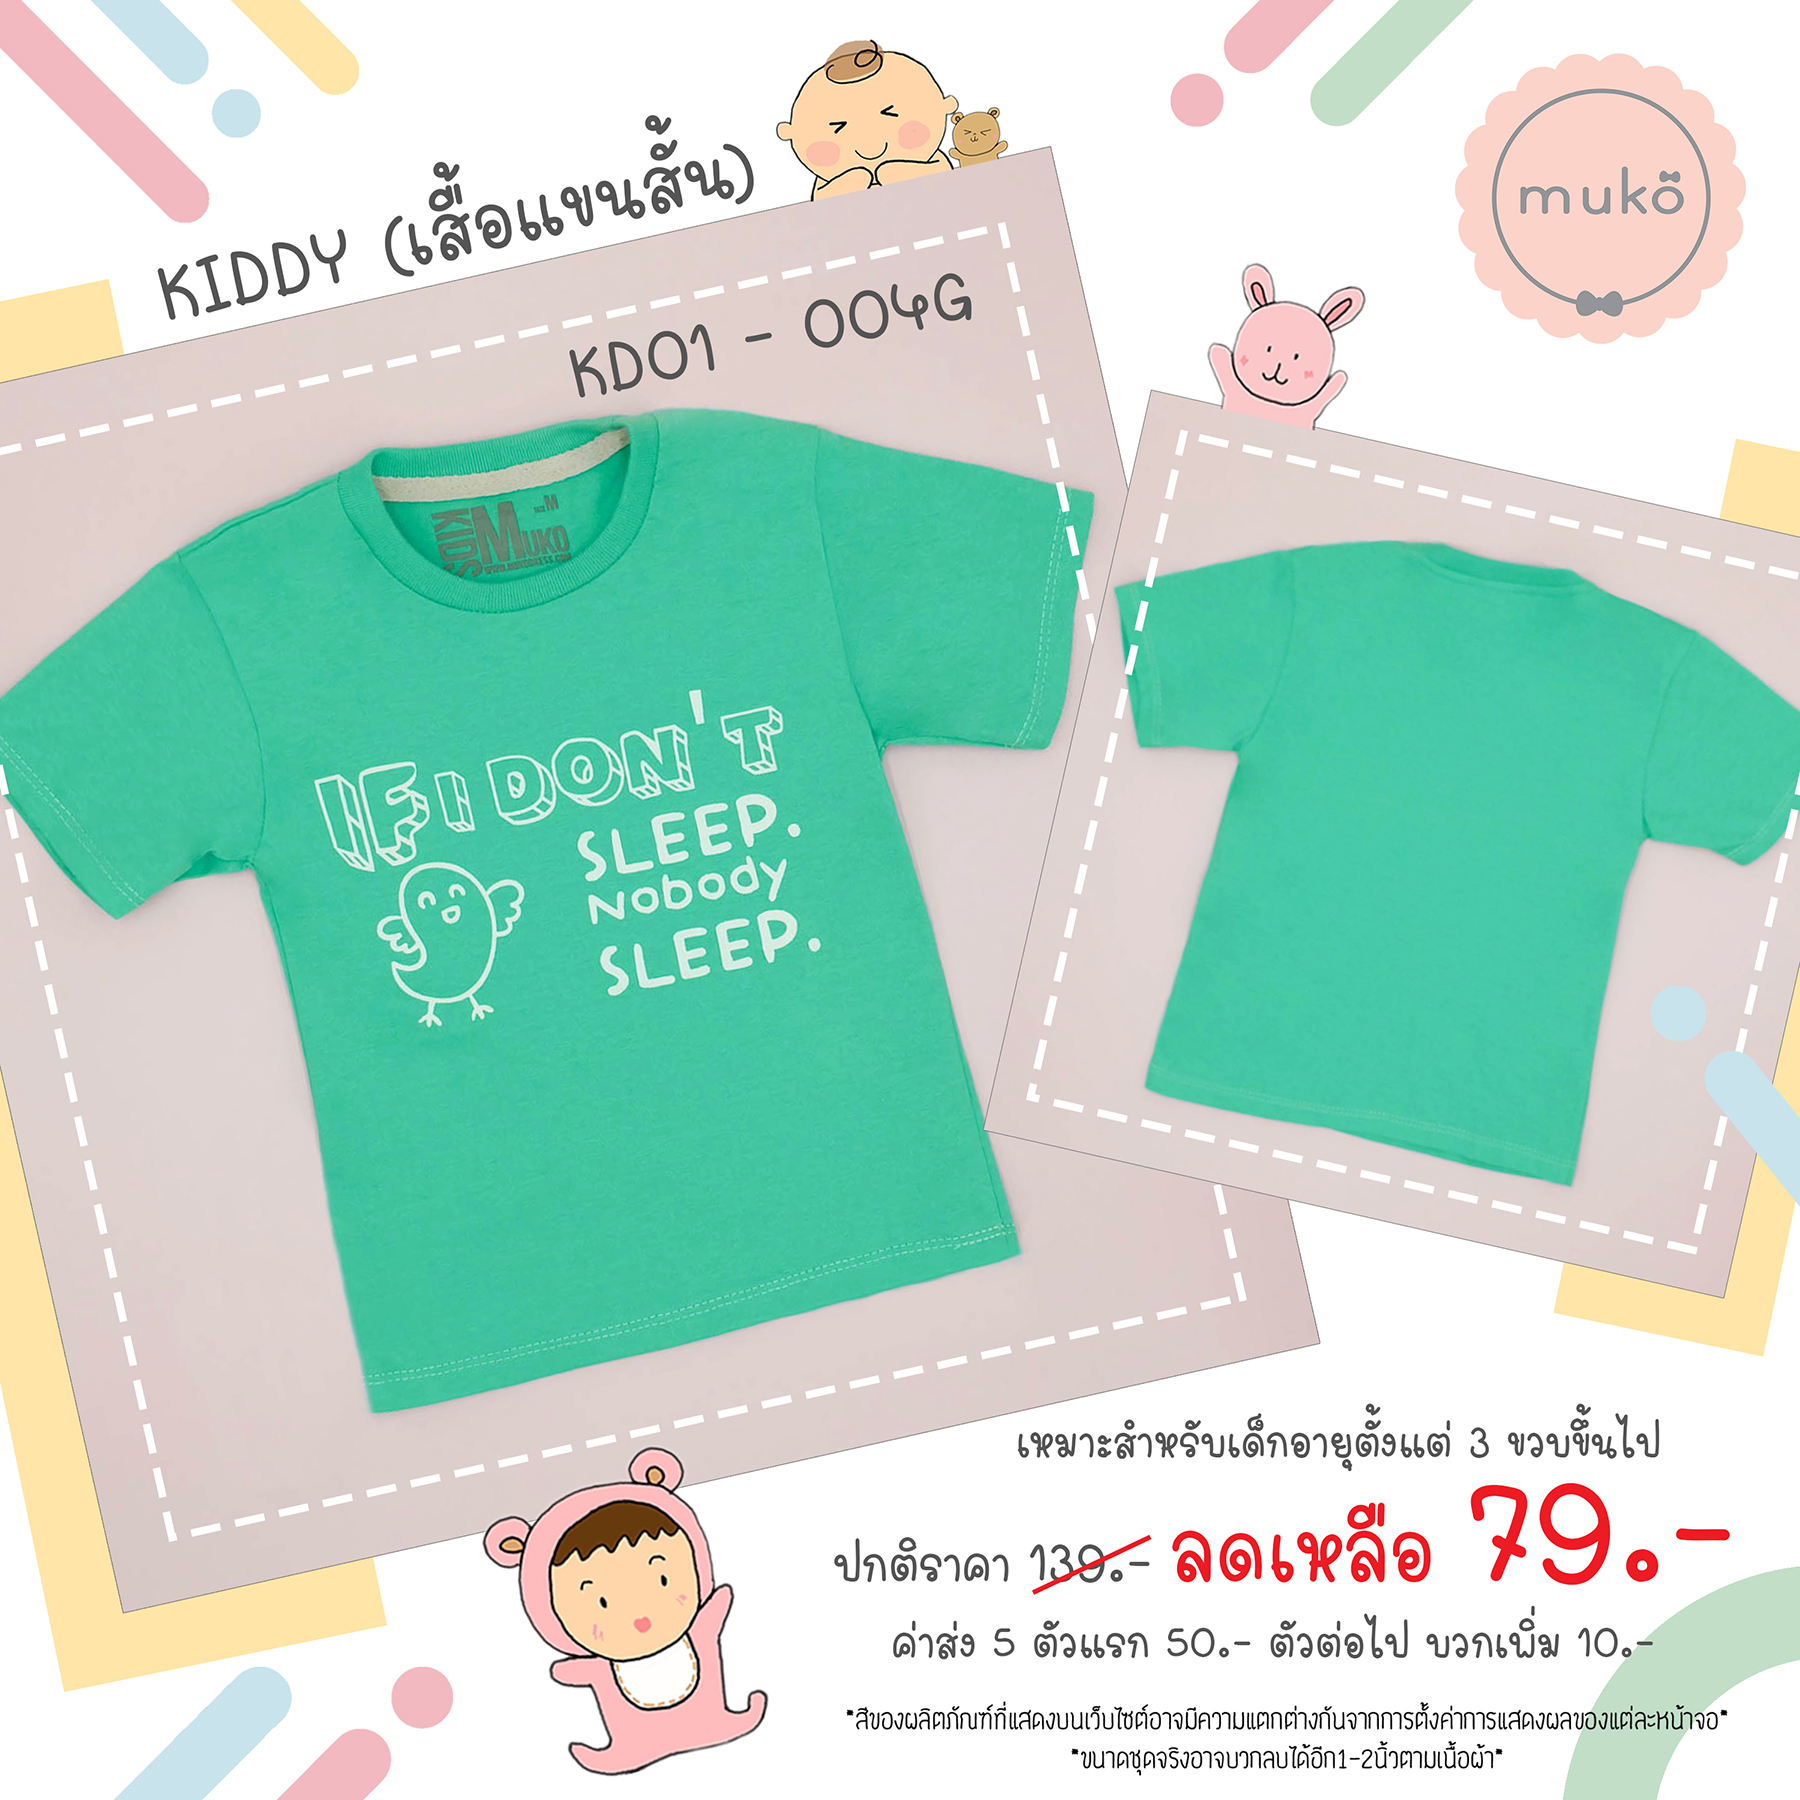 Muko Kiddy เสื้อเด็กเล็ก (แขนสั้น) Size L KD01-004G L ลาย If I don't sleep สีเขียว